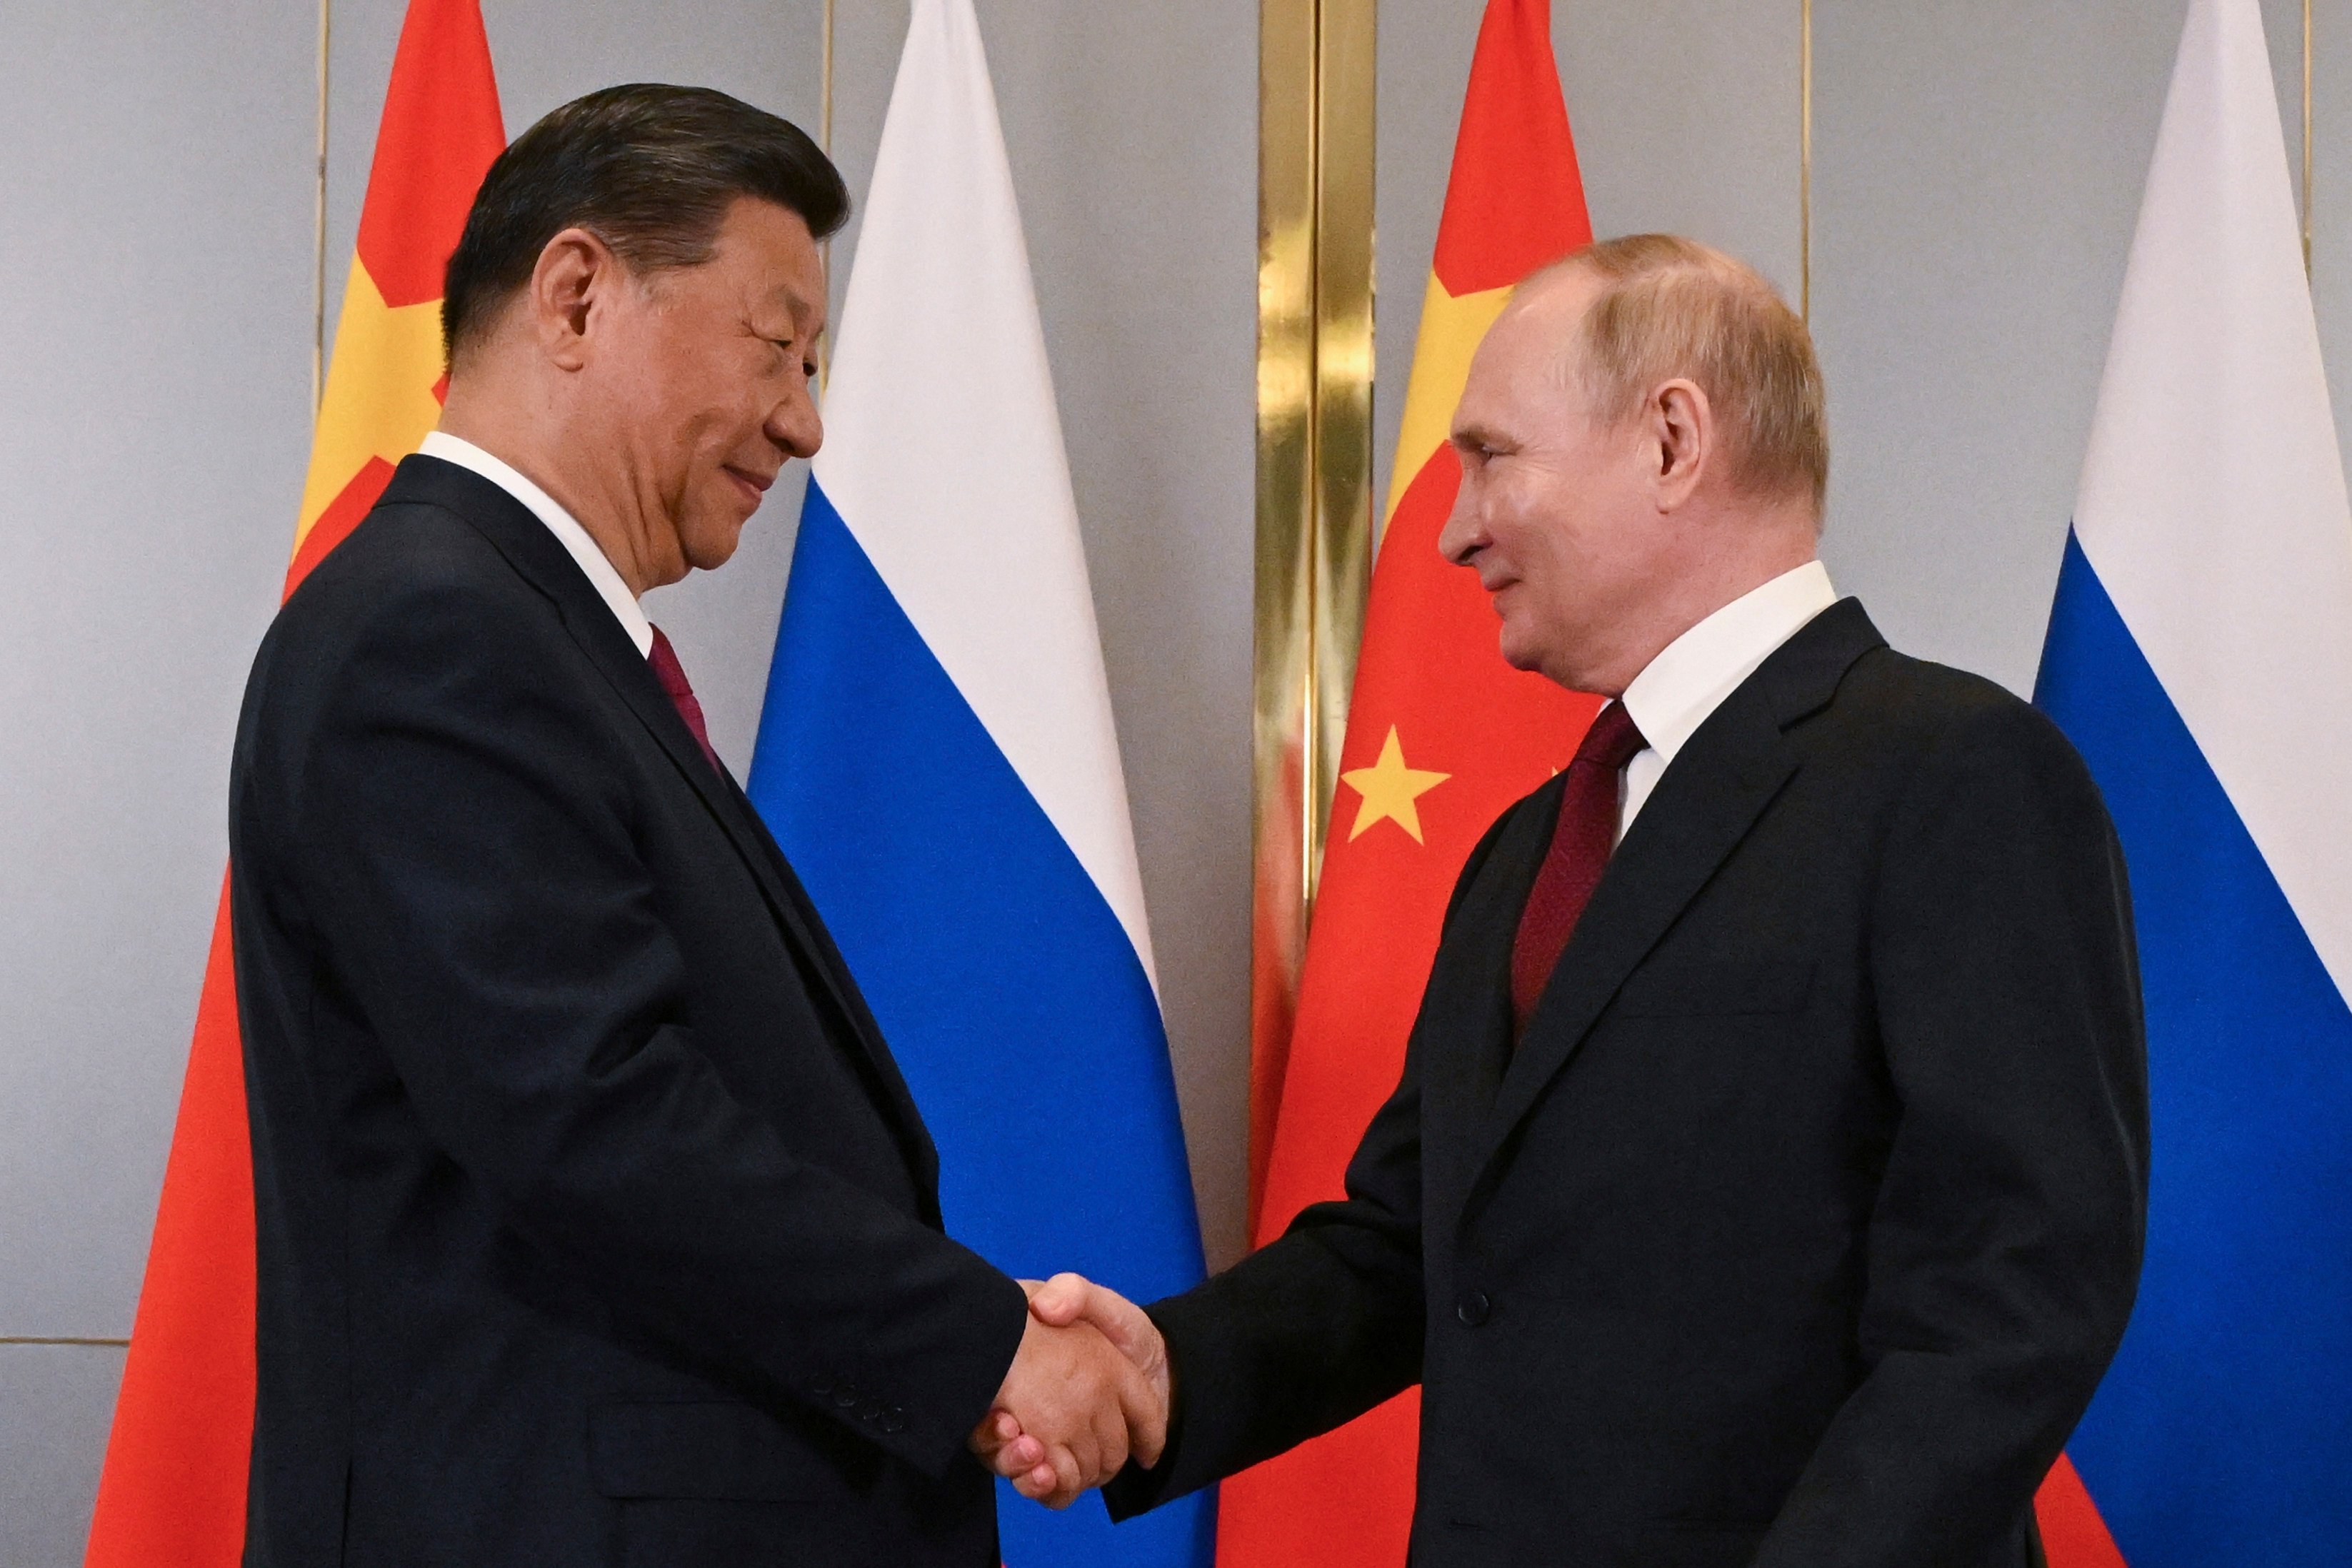 Russia’s President Vladimir Putin, right, and China’s President Xi Jinping in Astana, Kazakhstan on July 3. Photo: Sputnik / Kremlin Pool Photo via AP